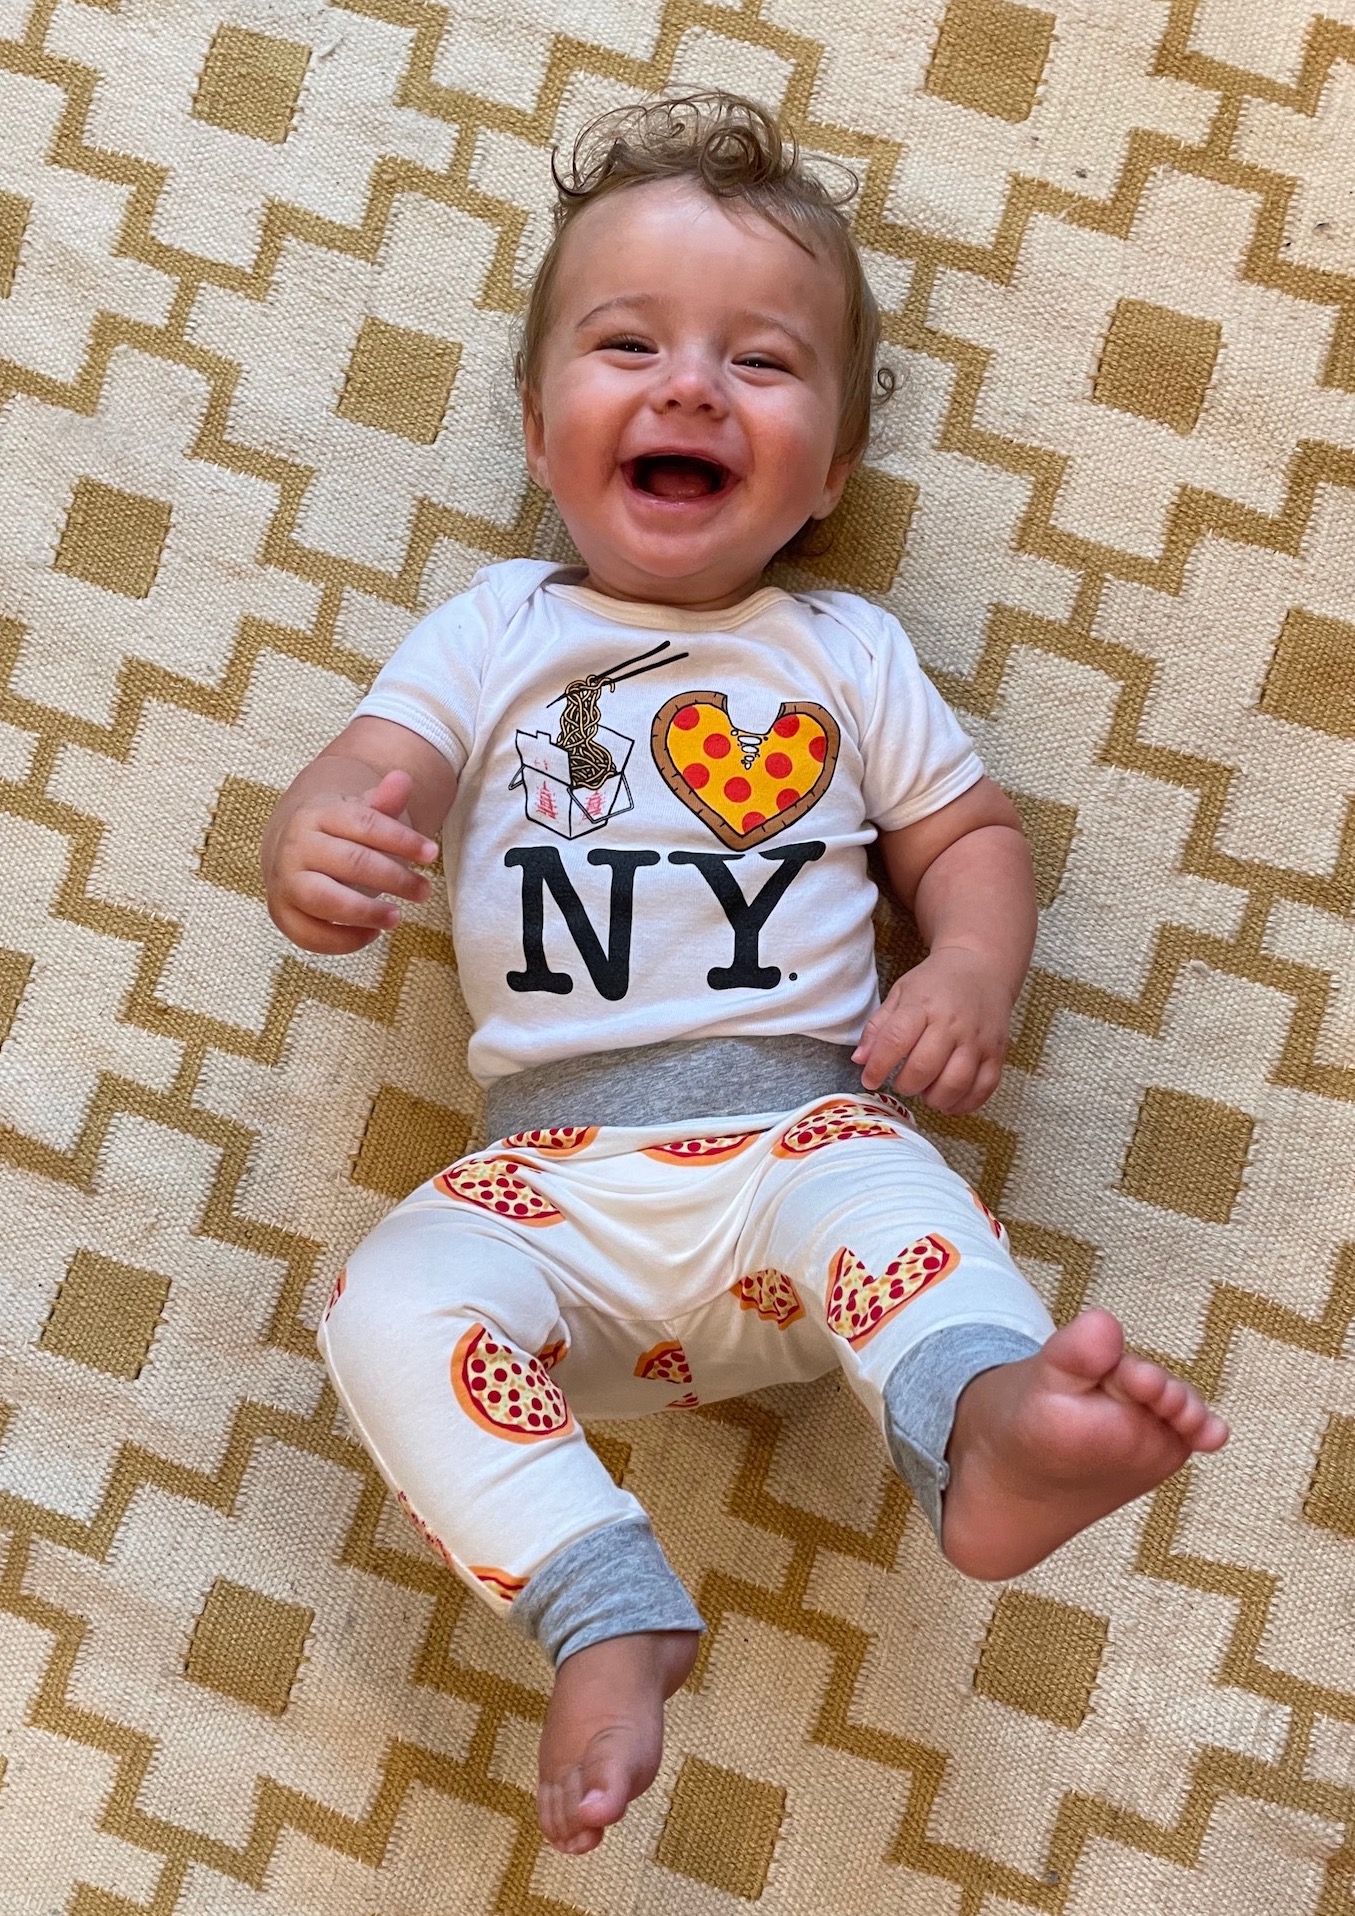 Baby wearing an I heart NY shirt from PiccoliNY with pizza pants